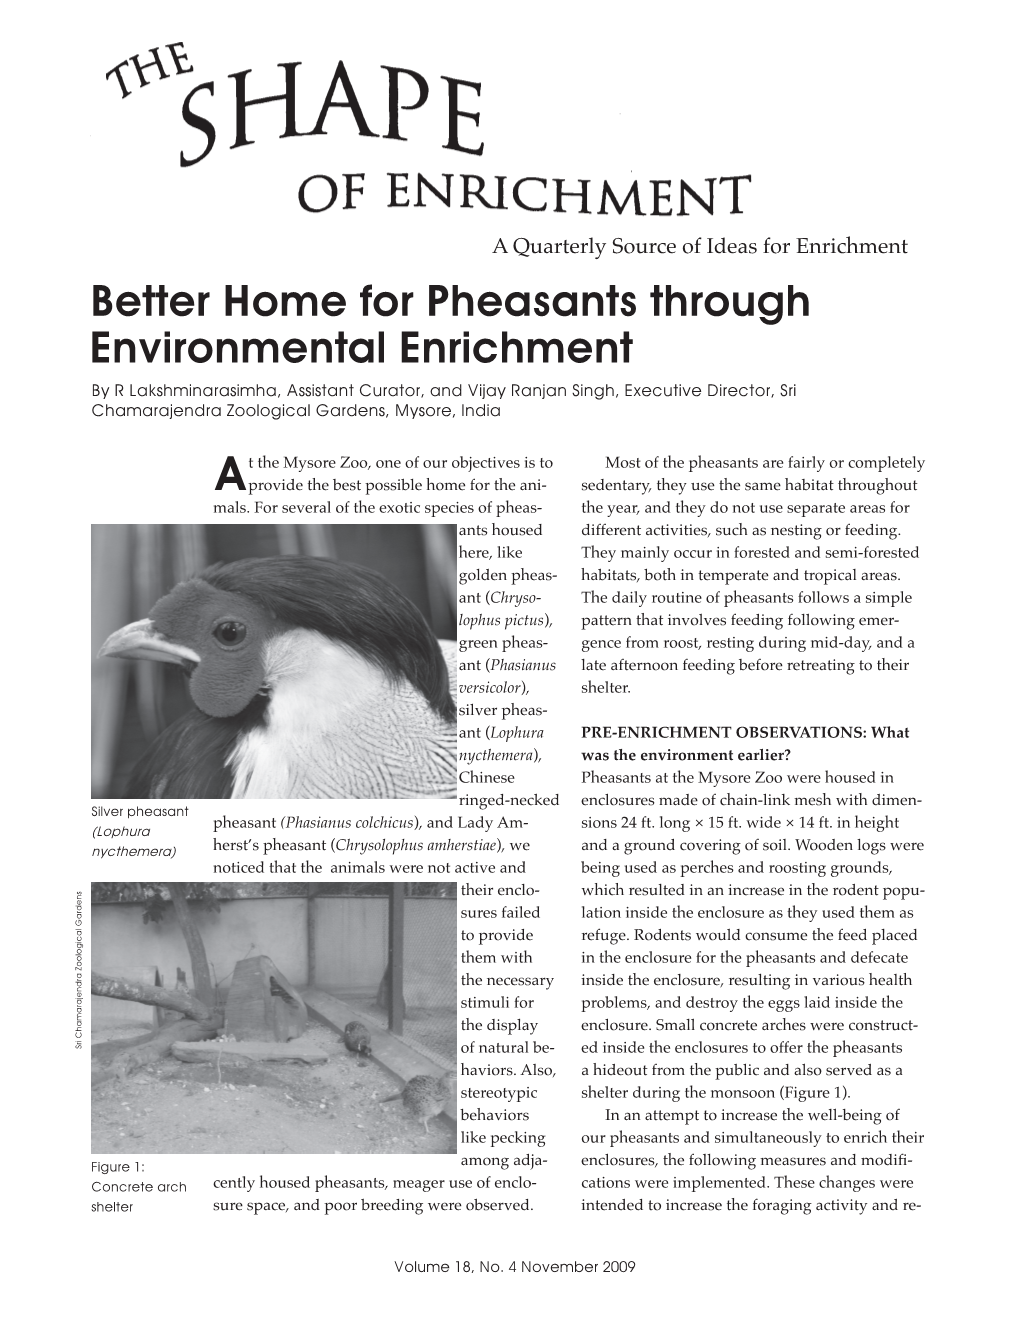 Better Home for Pheasants Through Environmental Enrichment